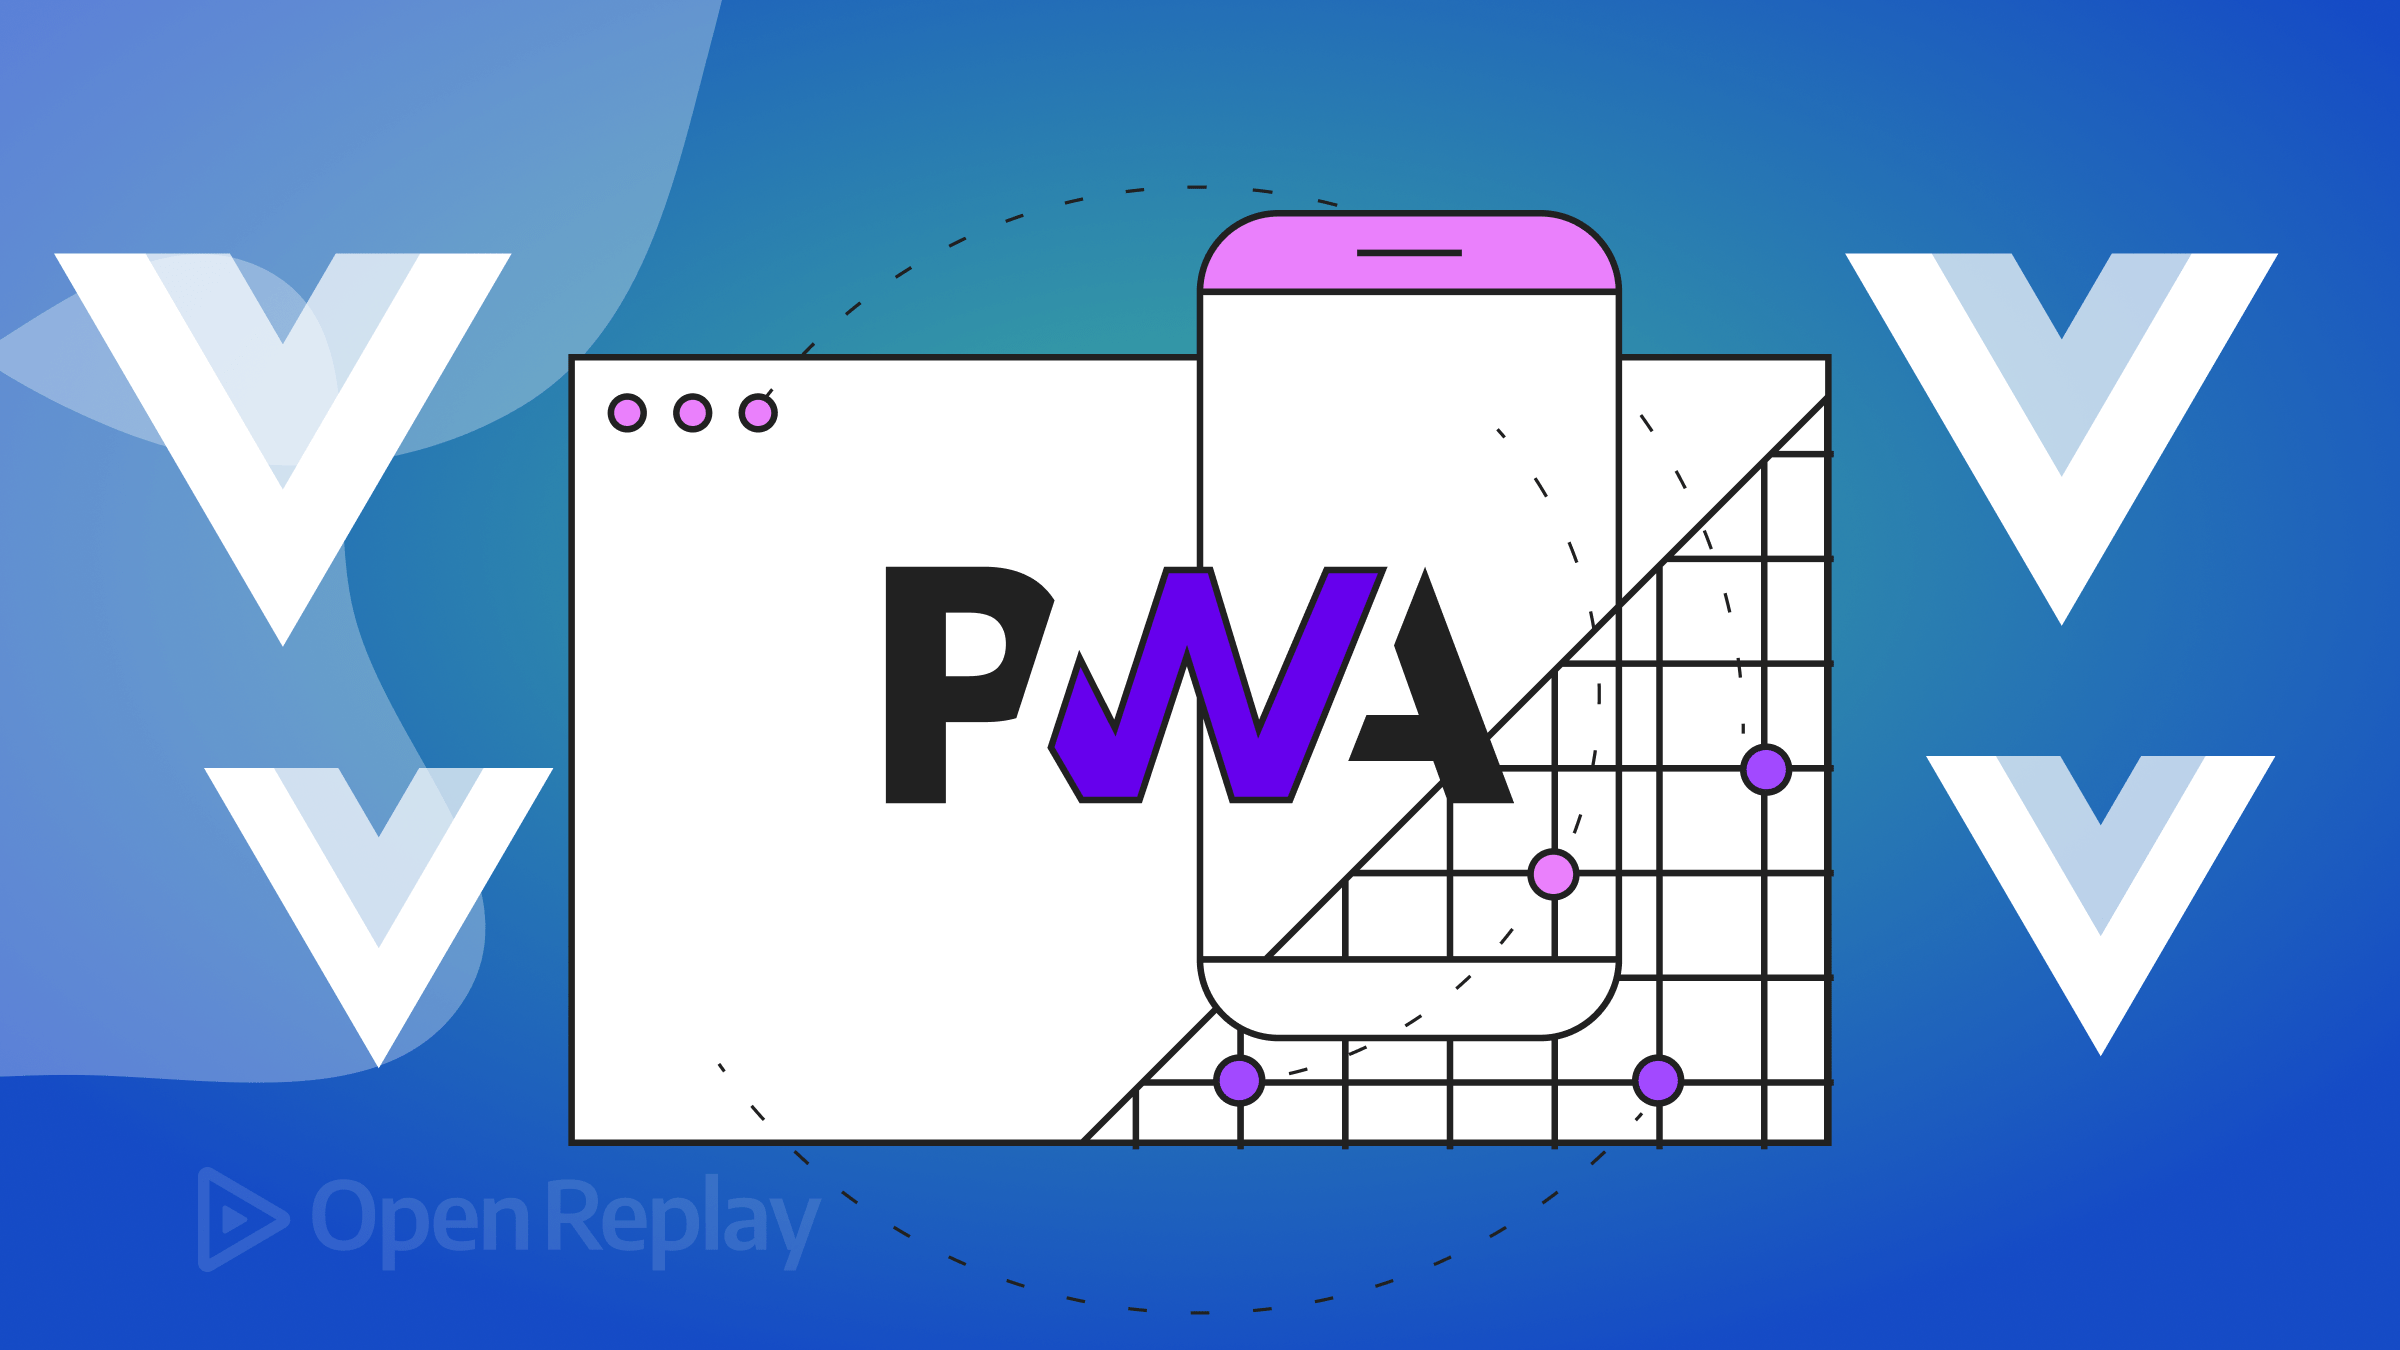 Creating a Progressive Web App (PWA)